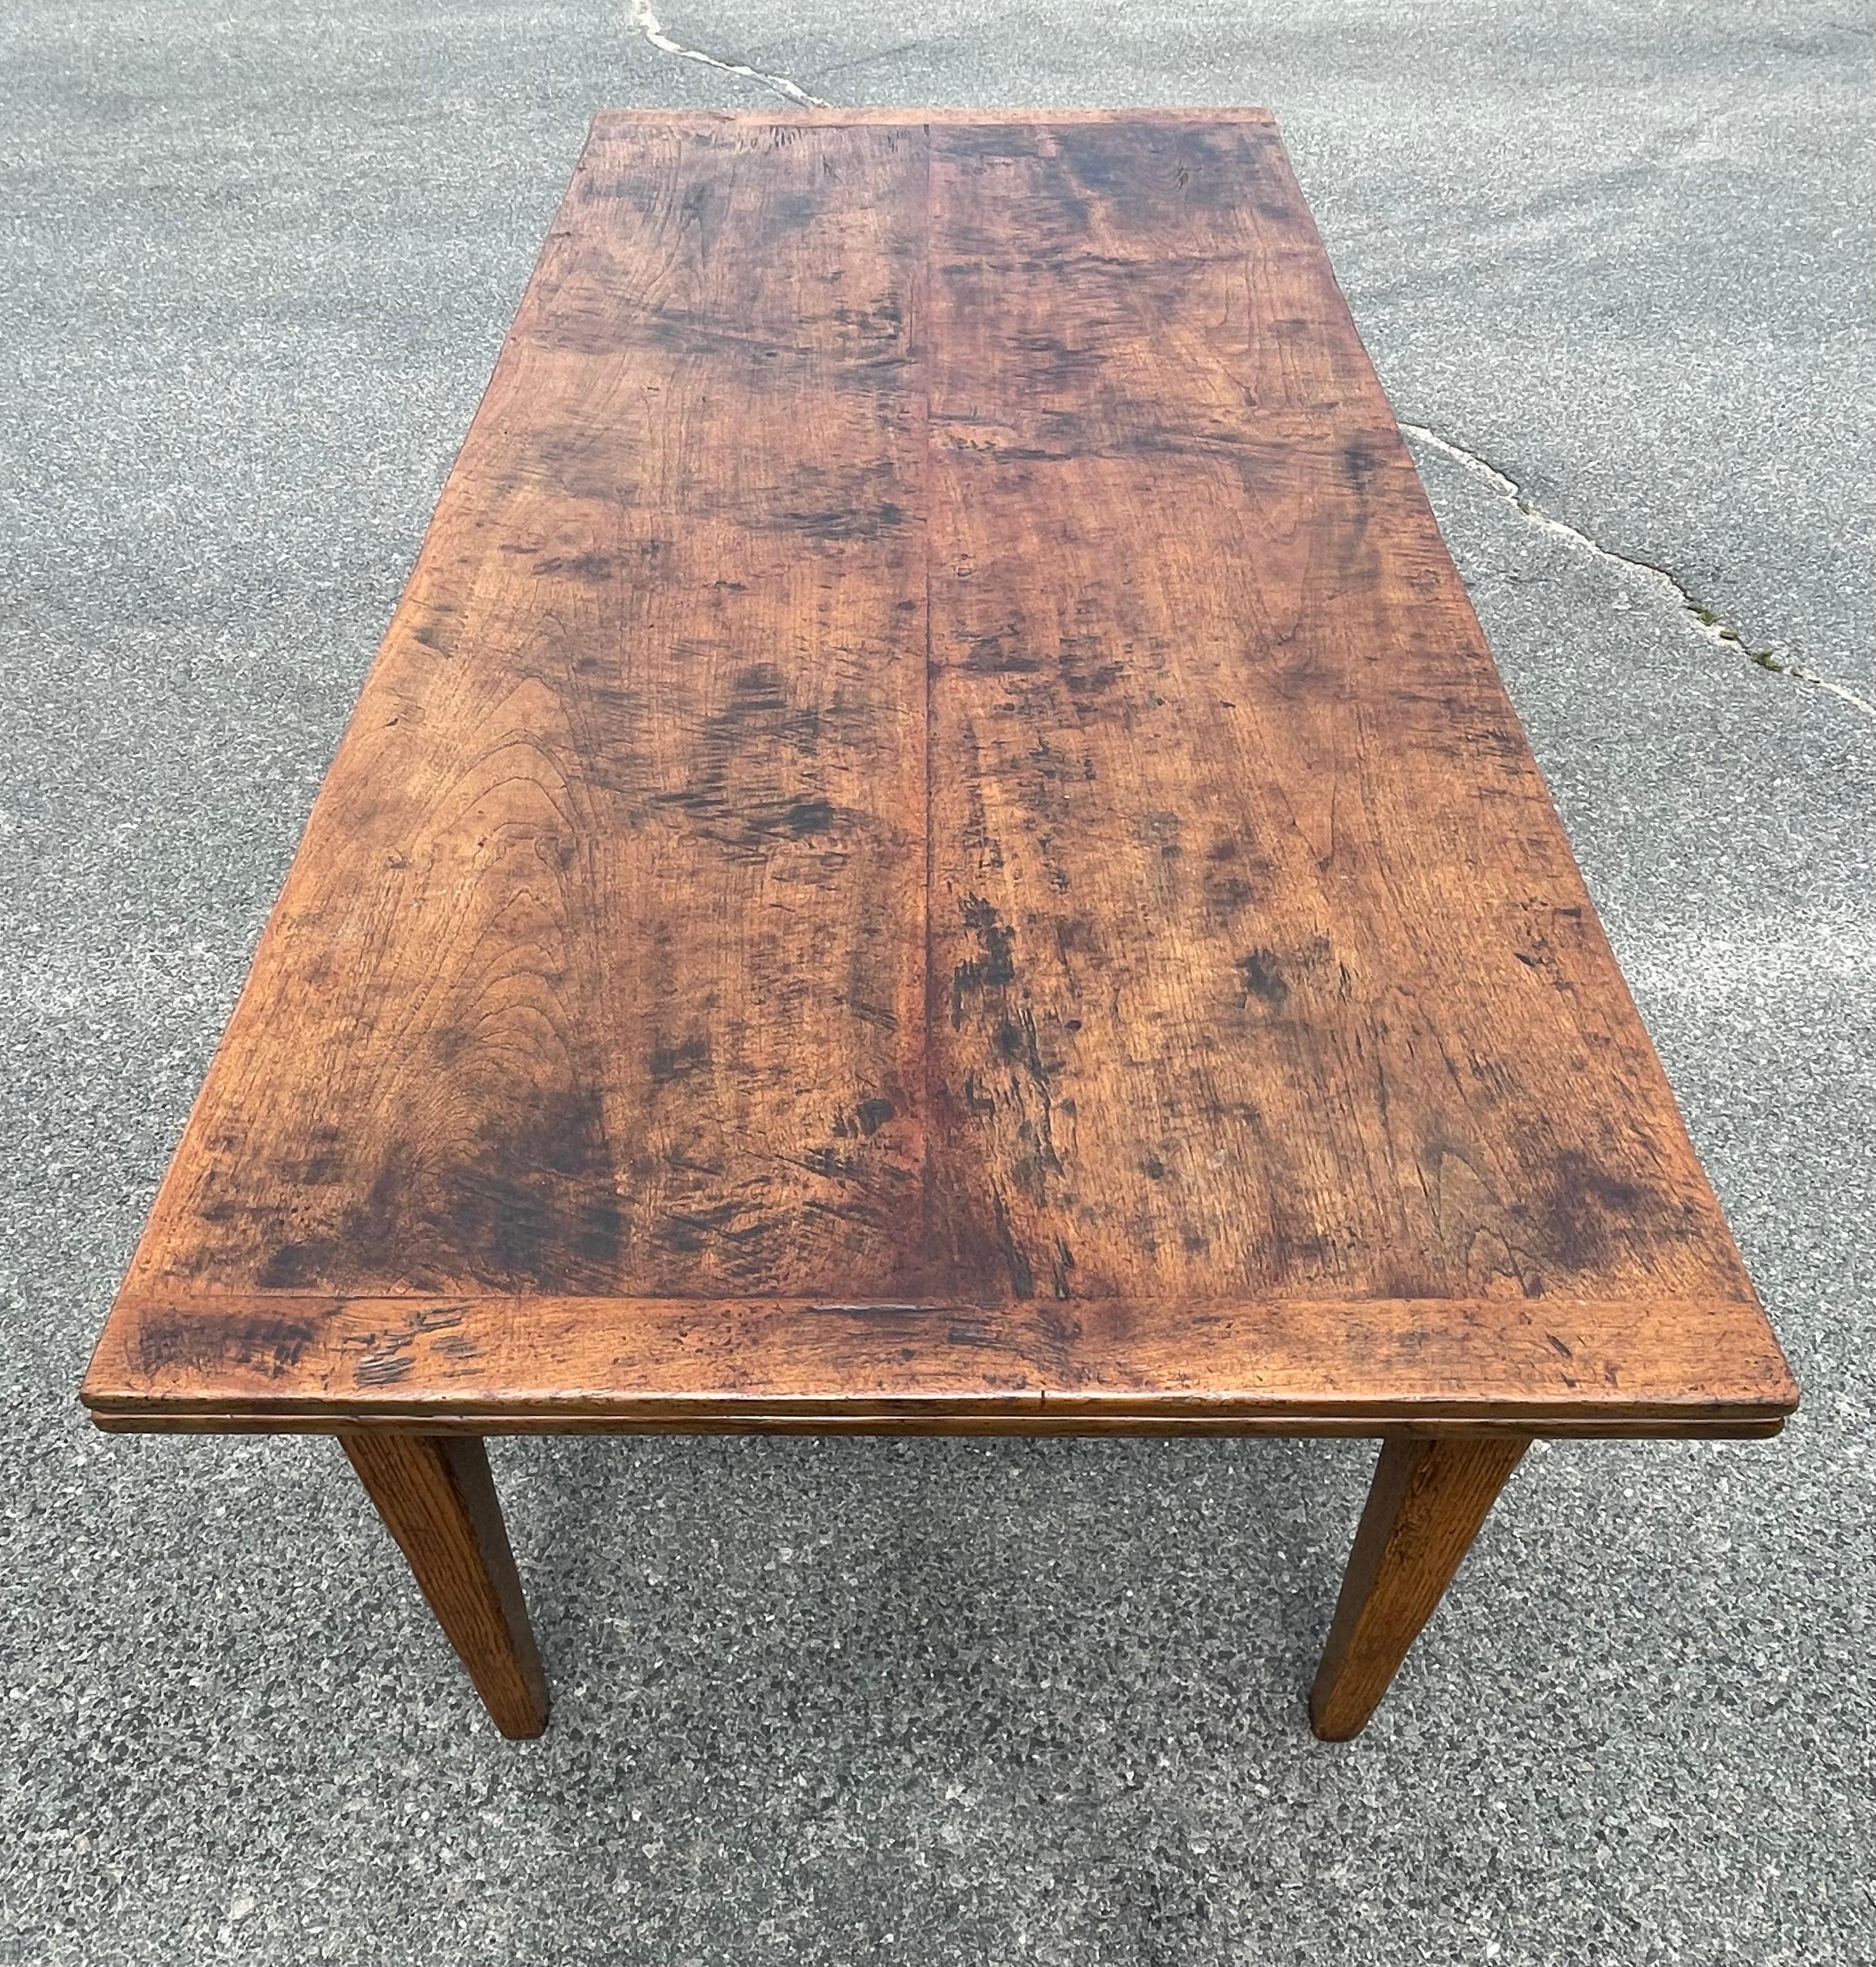 Oak Draw Table with lovely oak nut mottled finish top on taper legs.
Extends to 123